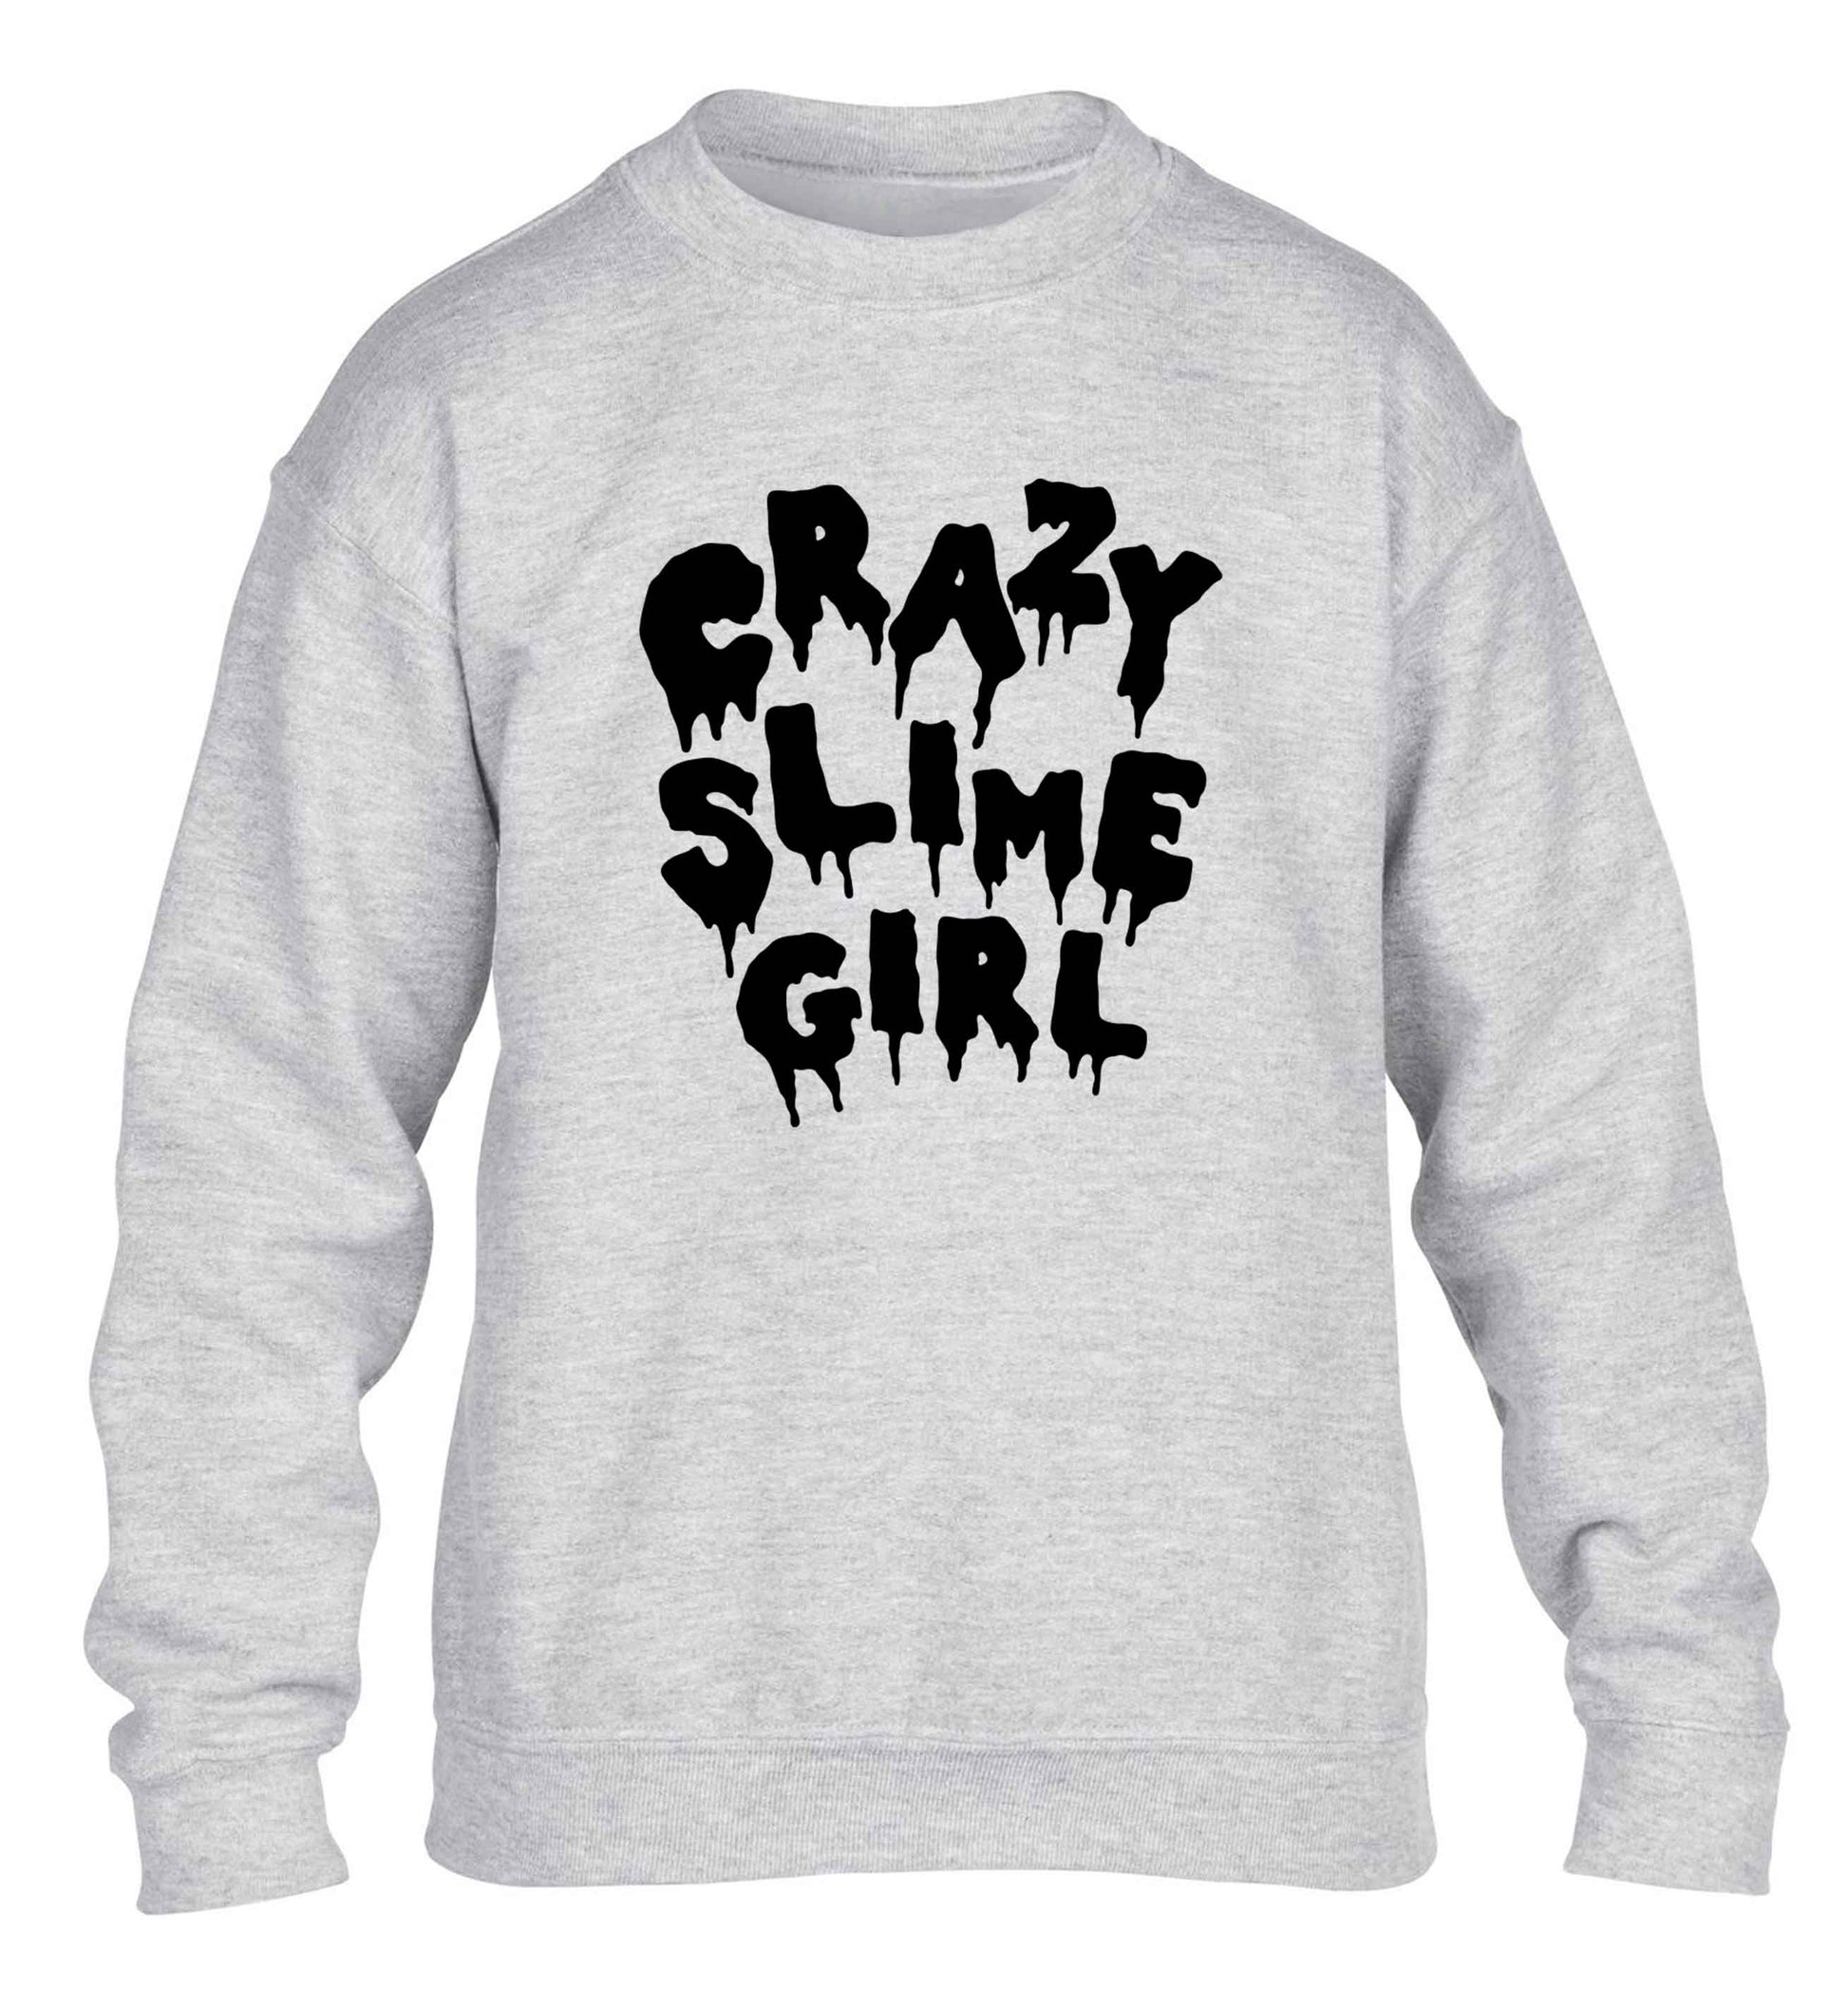 Crazy slime girl children's grey sweater 12-13 Years